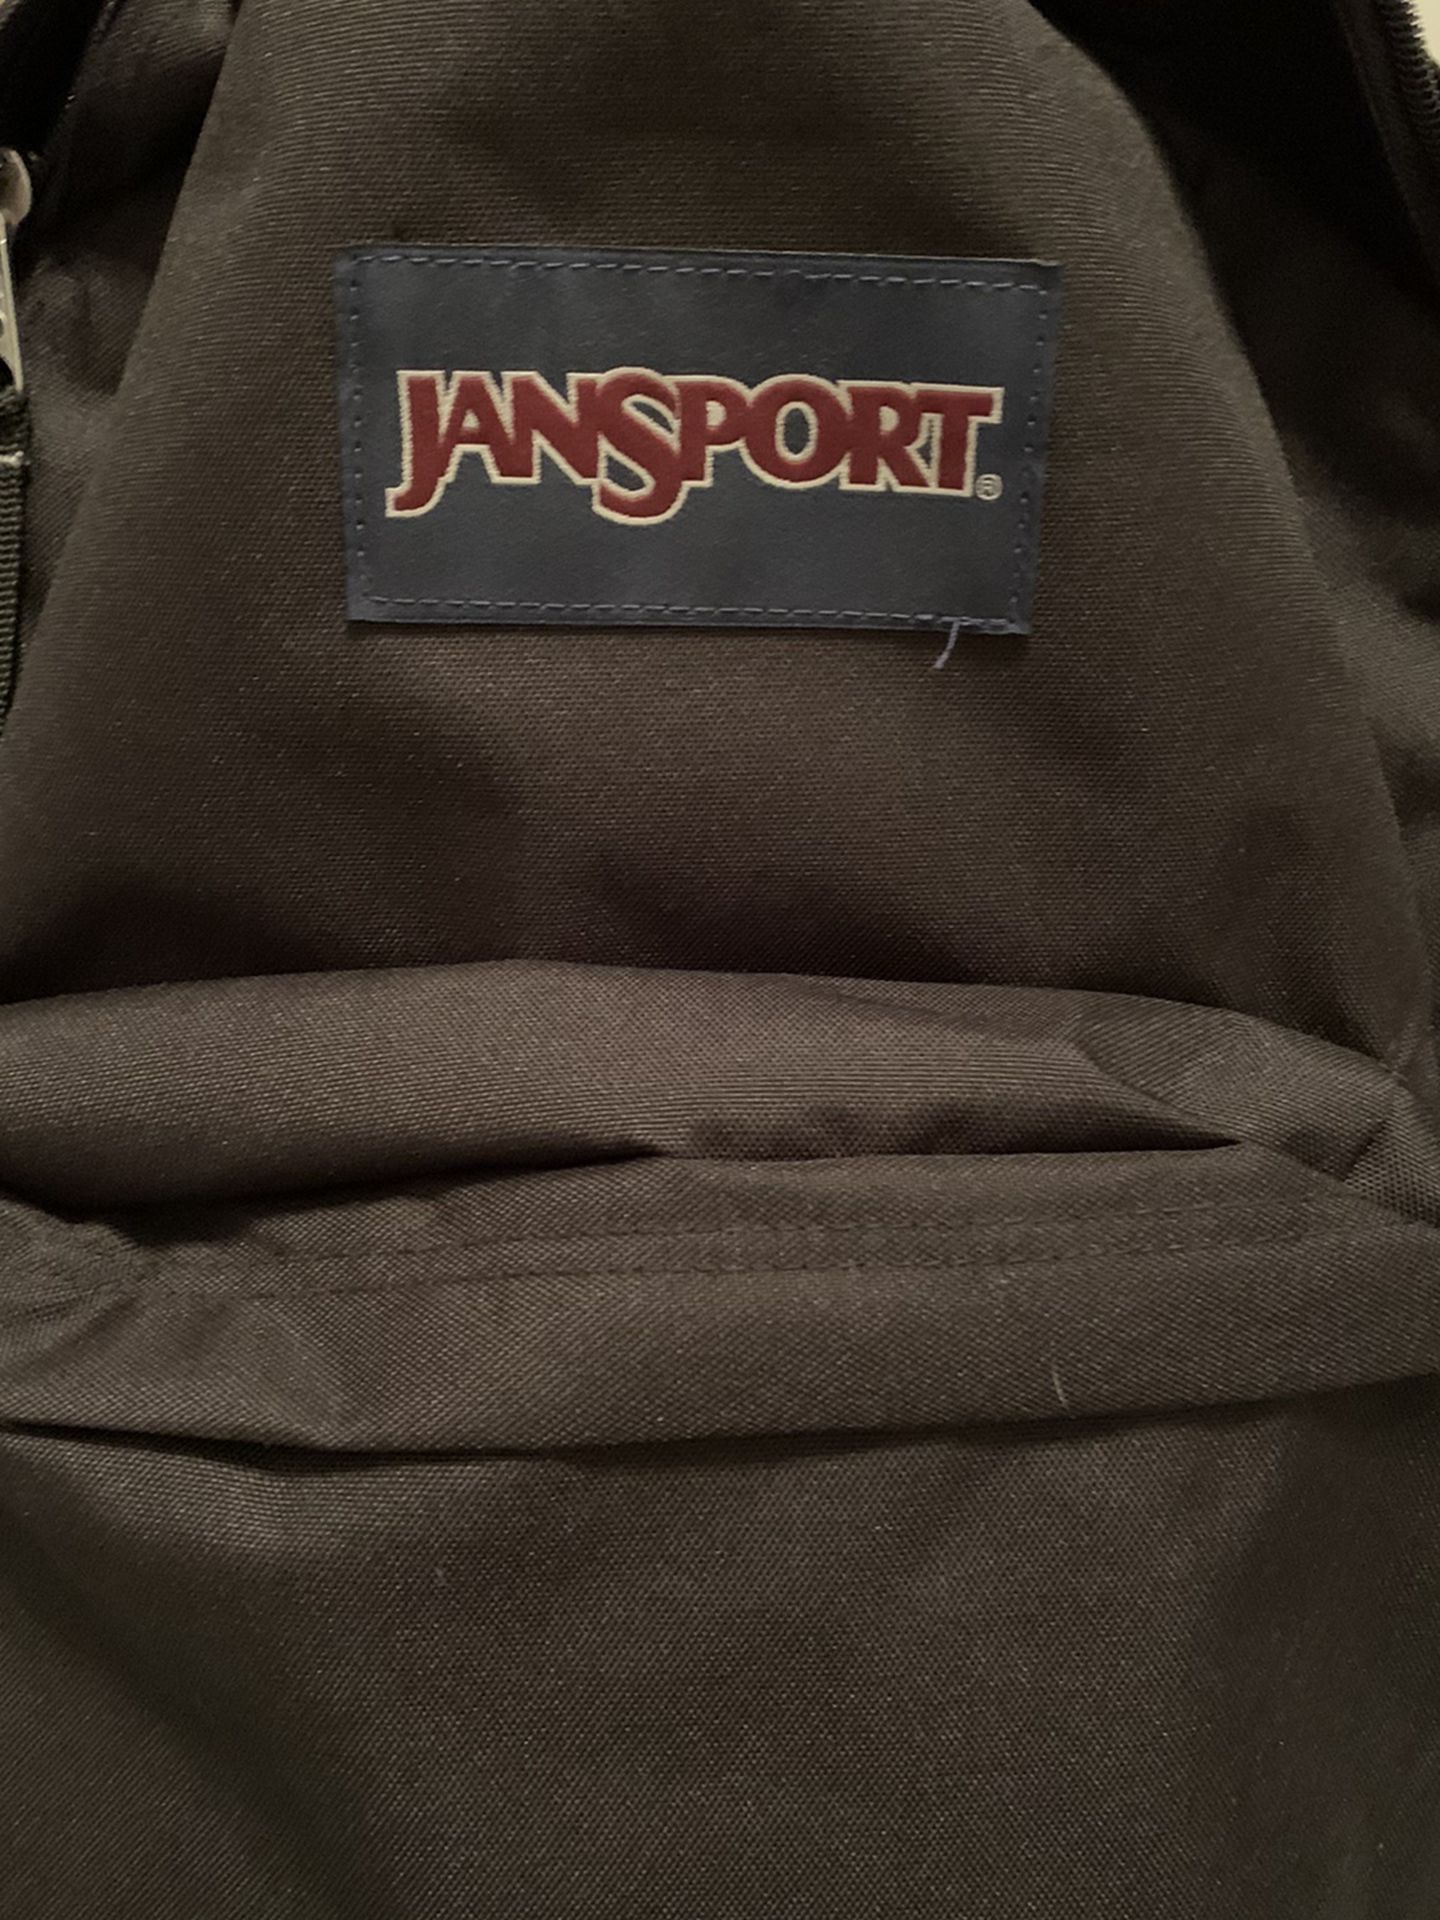 Brand new Jansport Backpack